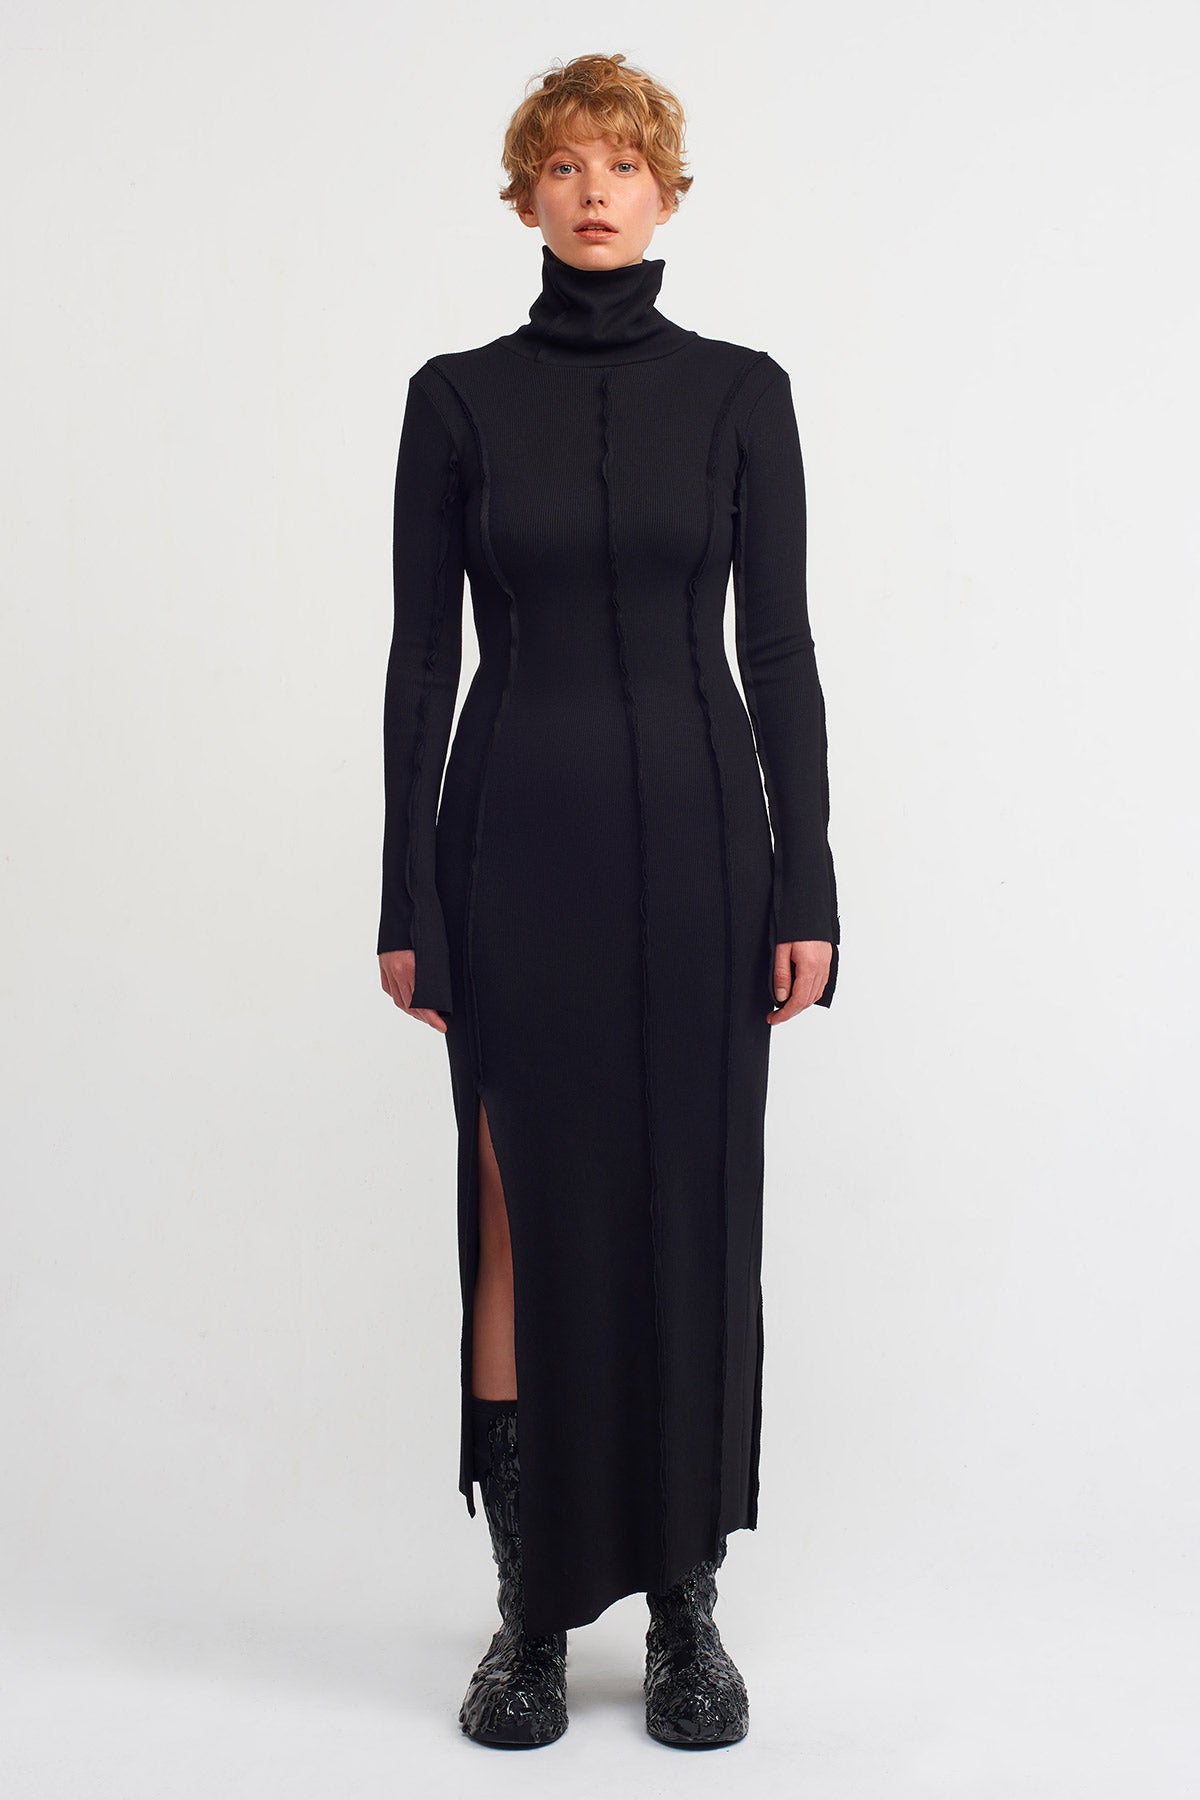 Black Asymmetrical, Turtleneck Ribbed Dress-K234014007